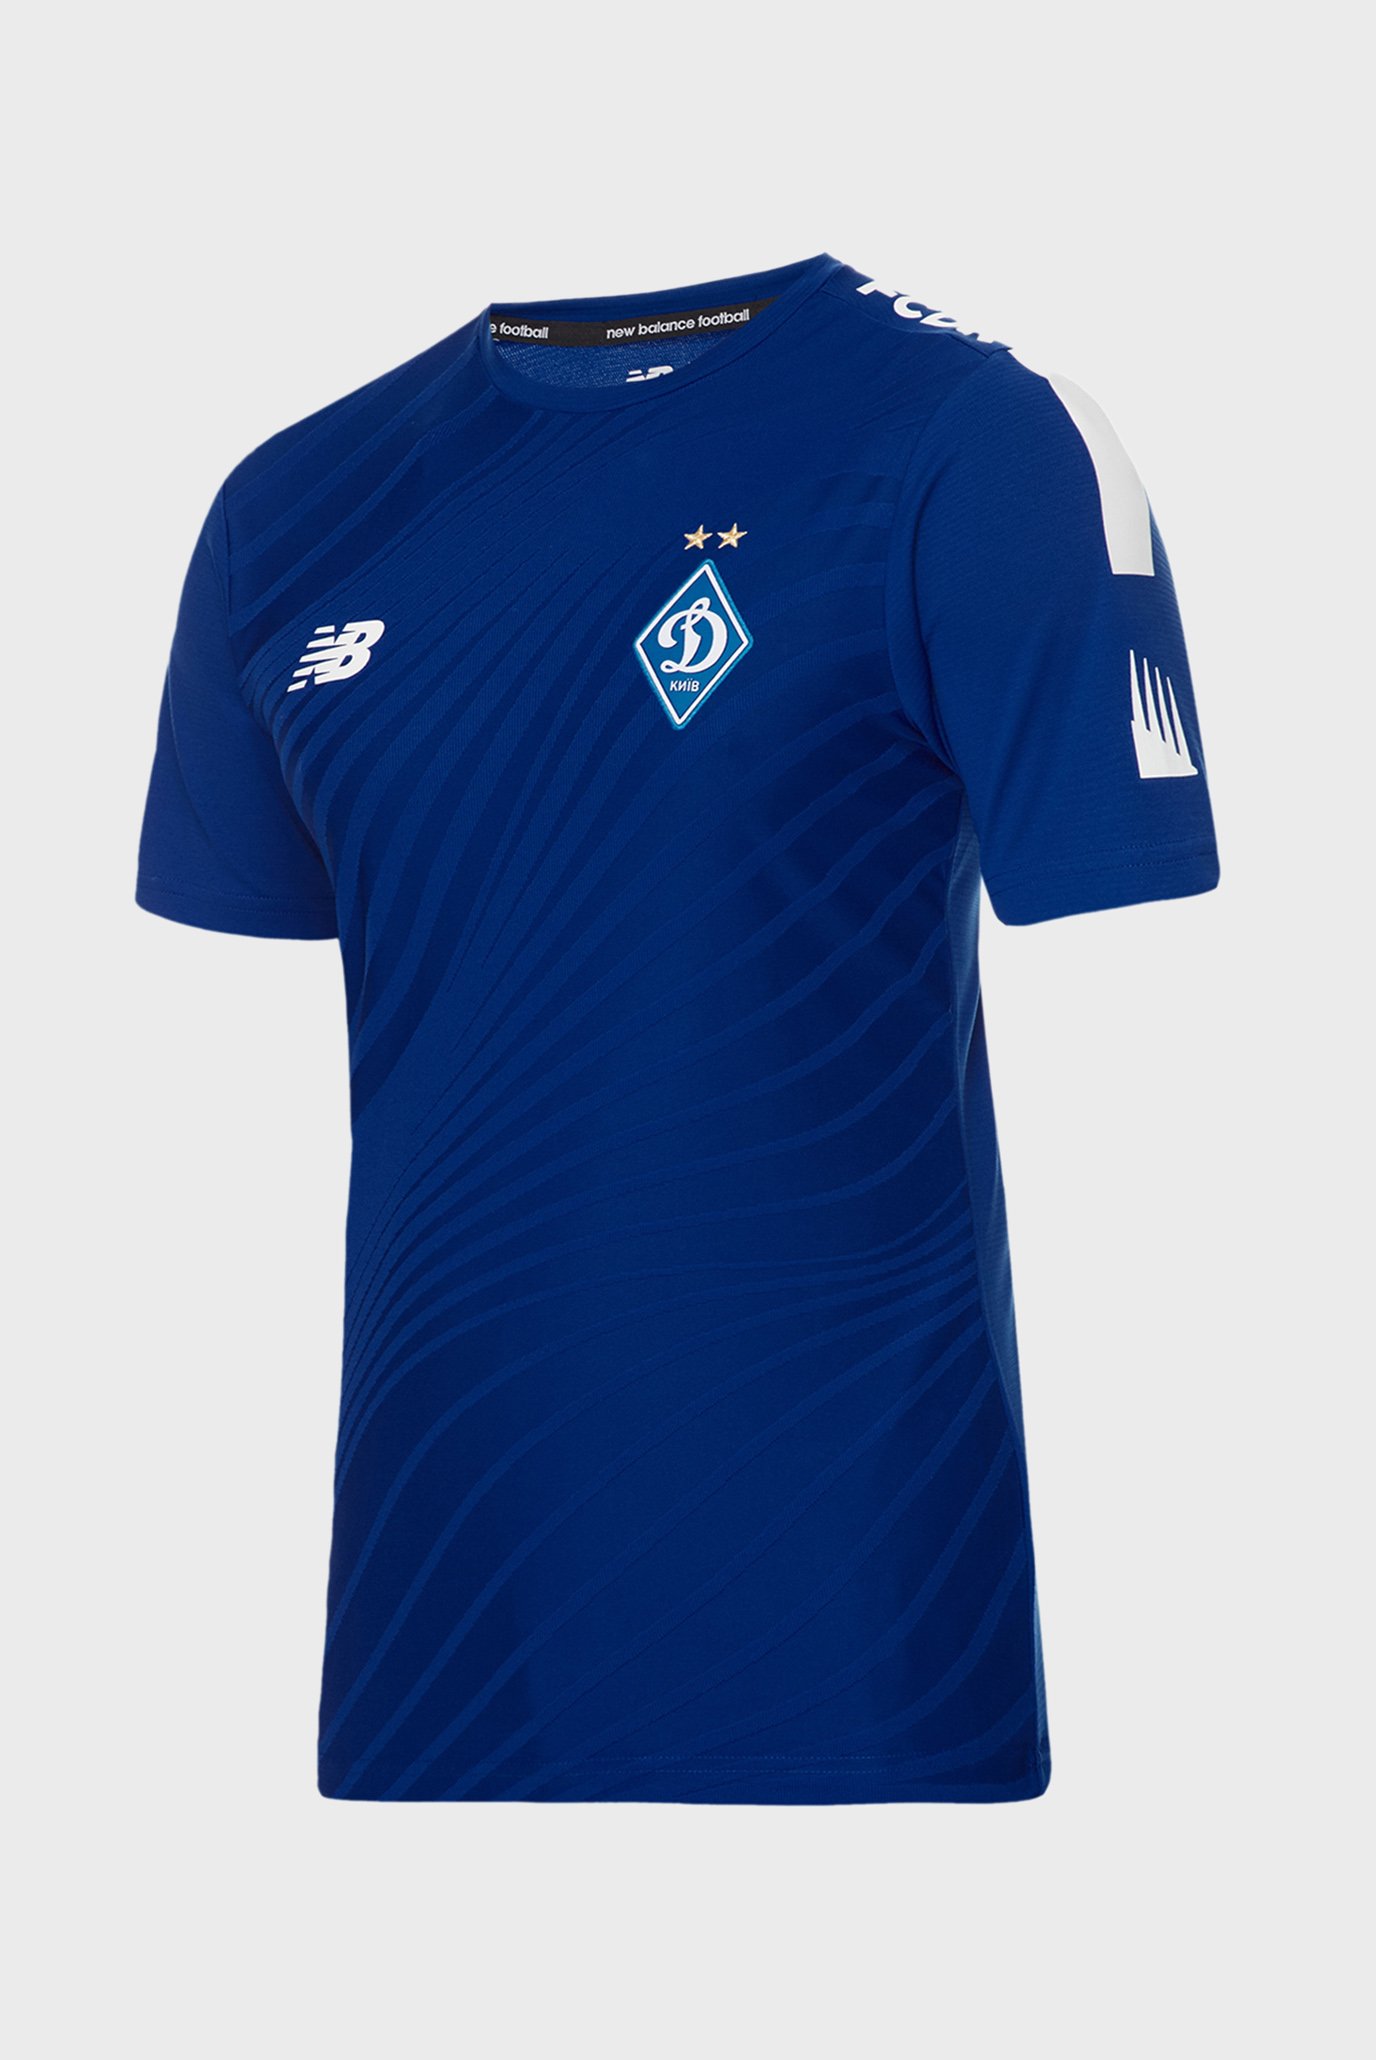 Мужская синяя футболка ФК «Динамо» Киев Pre-Game 1